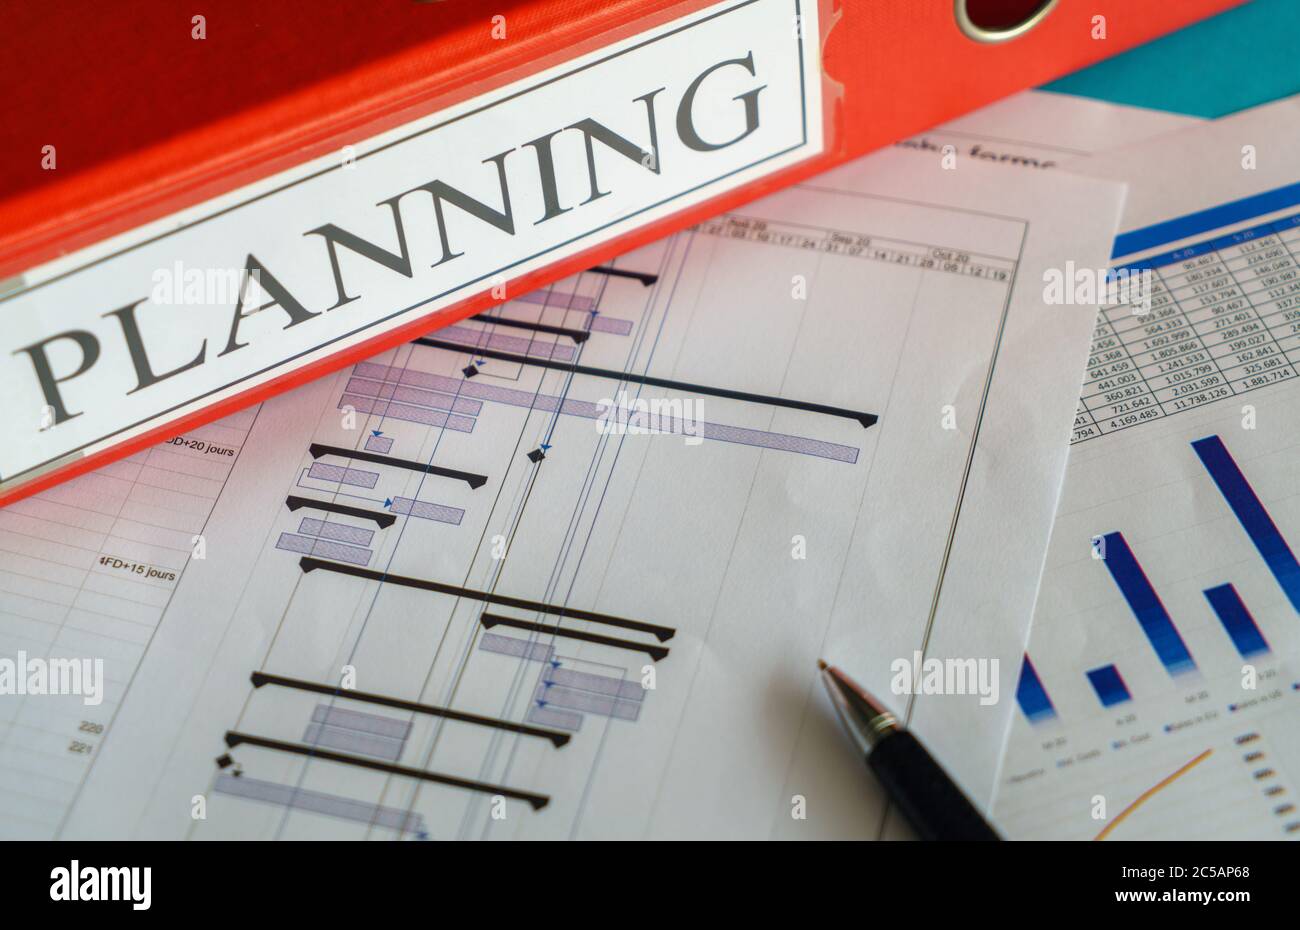 Bauprojektplanung, Management-Konzept, gantt-Diagramm Zeitplan, Blaupausen, Helm, Rechner verschiedene Management-Tools Stockfoto